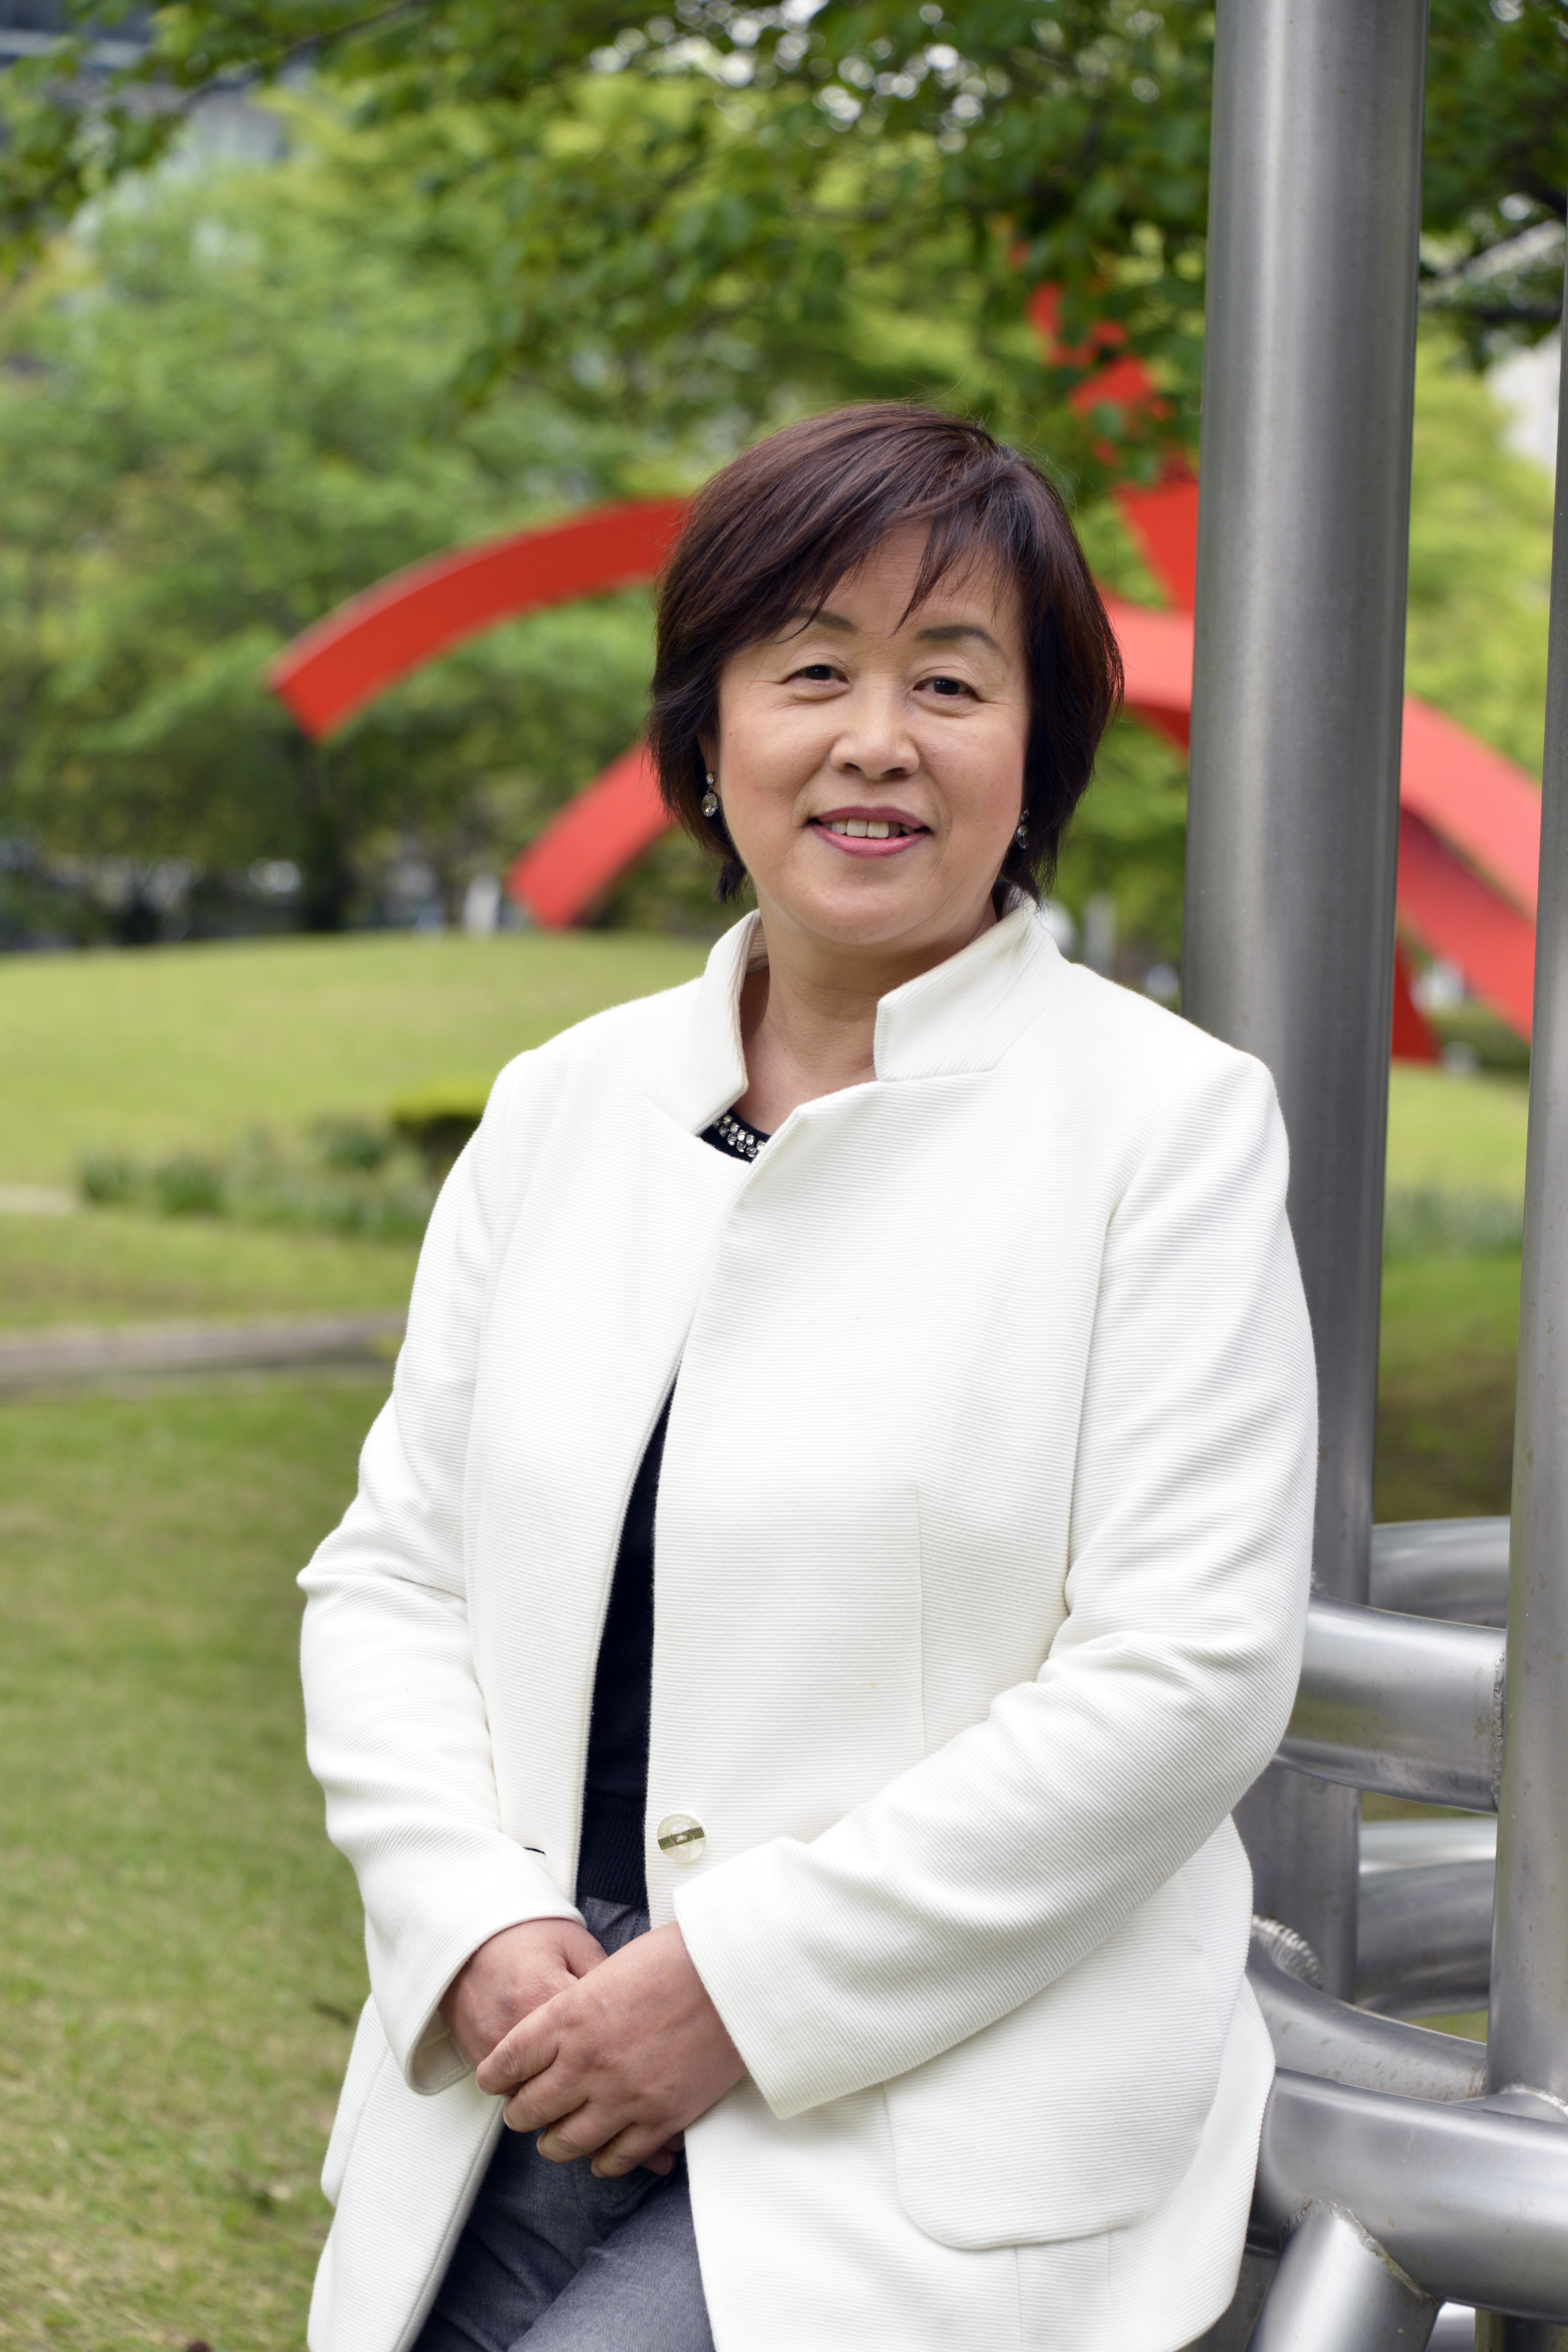 Dr Setsuko Hashimoto, president and CEO